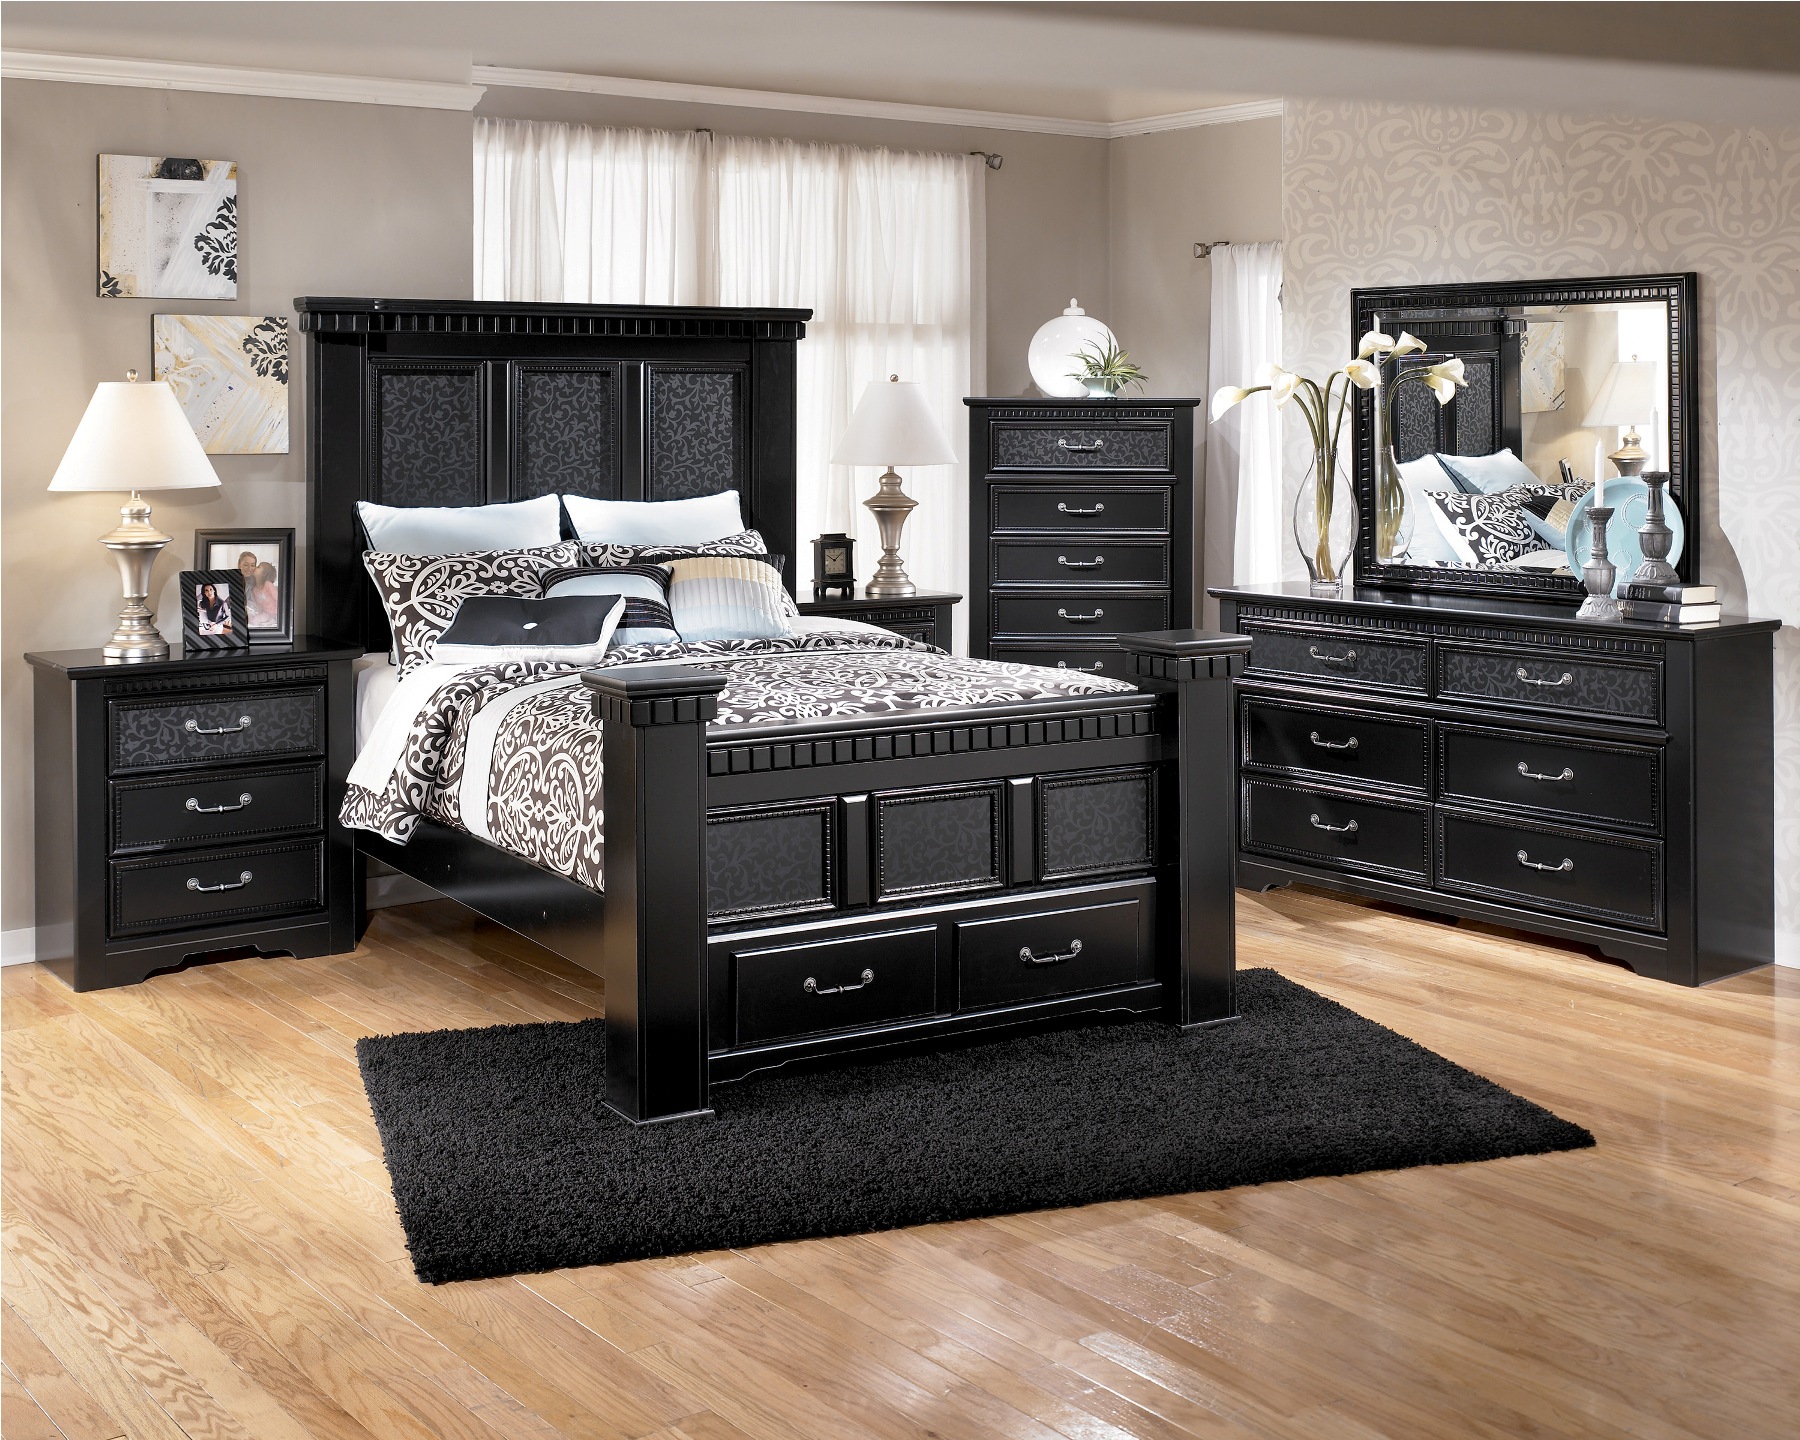 Organized Black Bedroom Furniture Decor